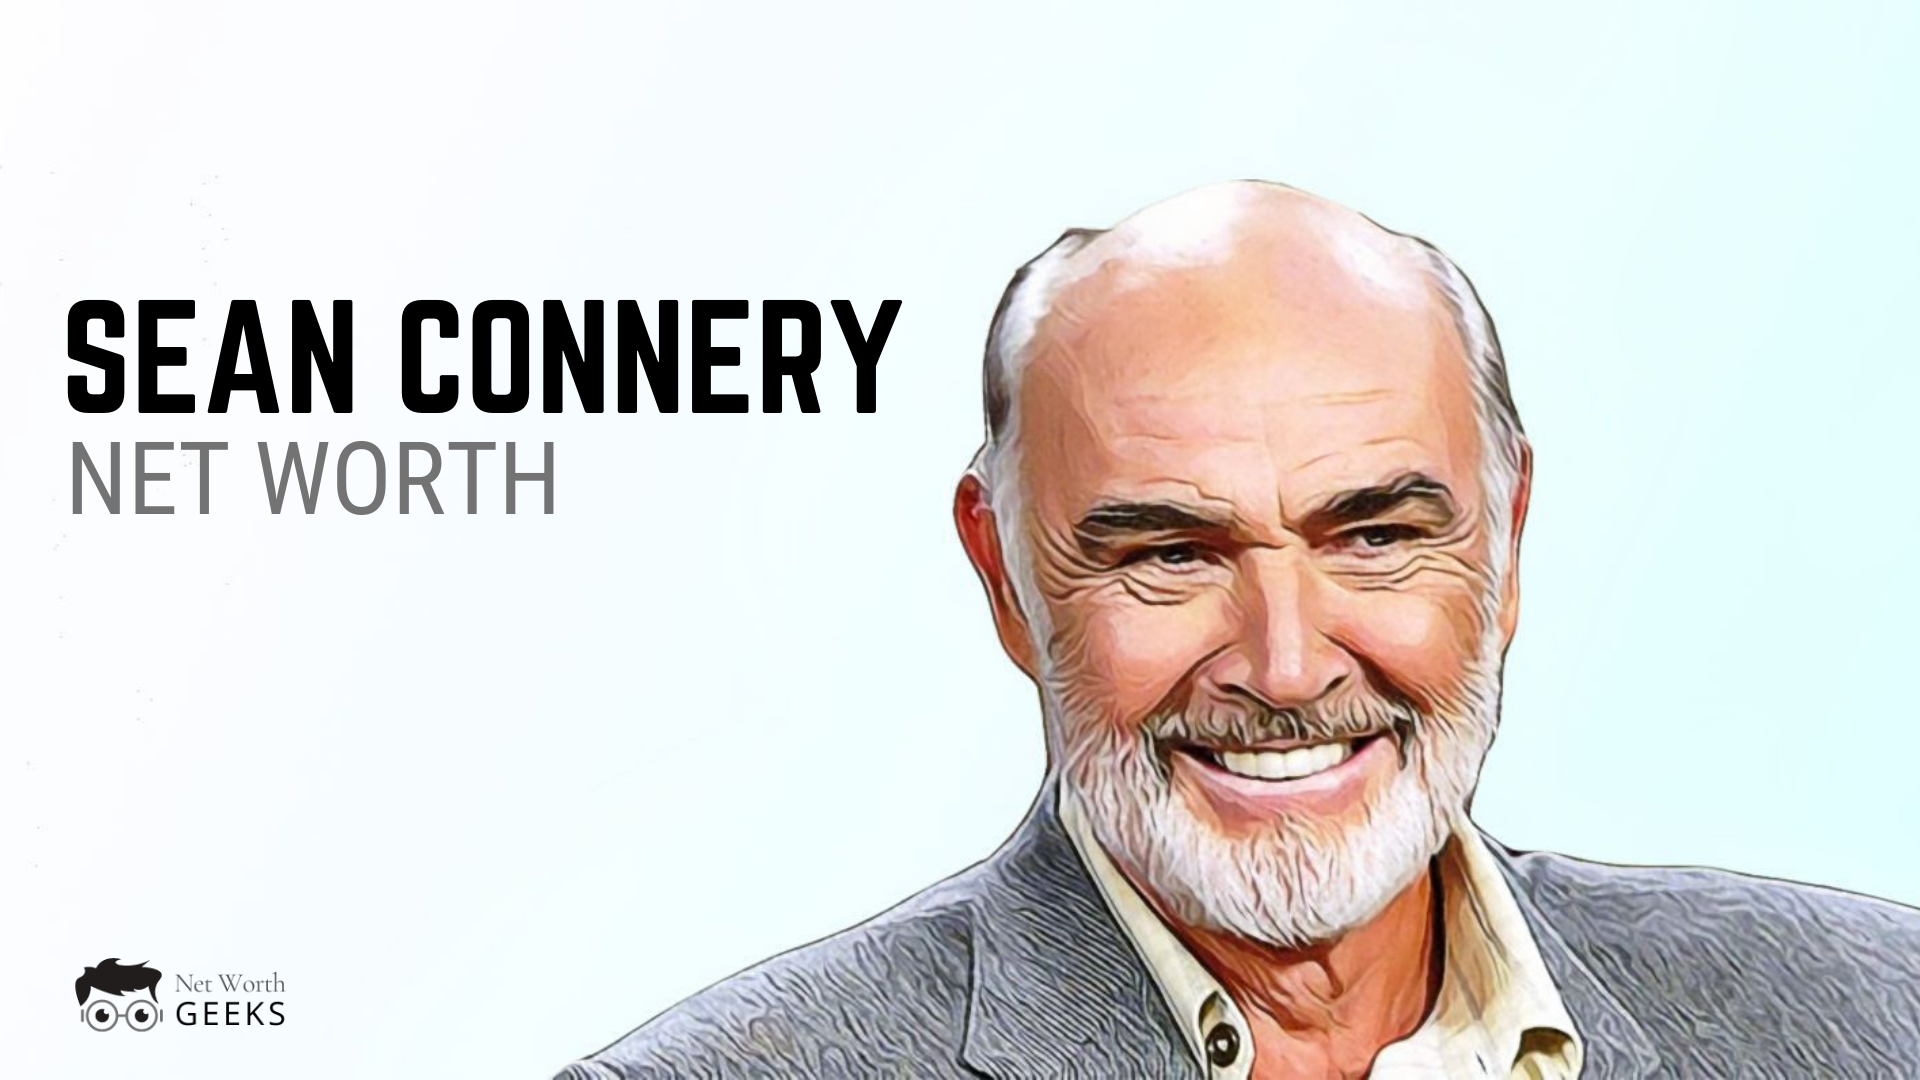 Sean Connery Net Worth